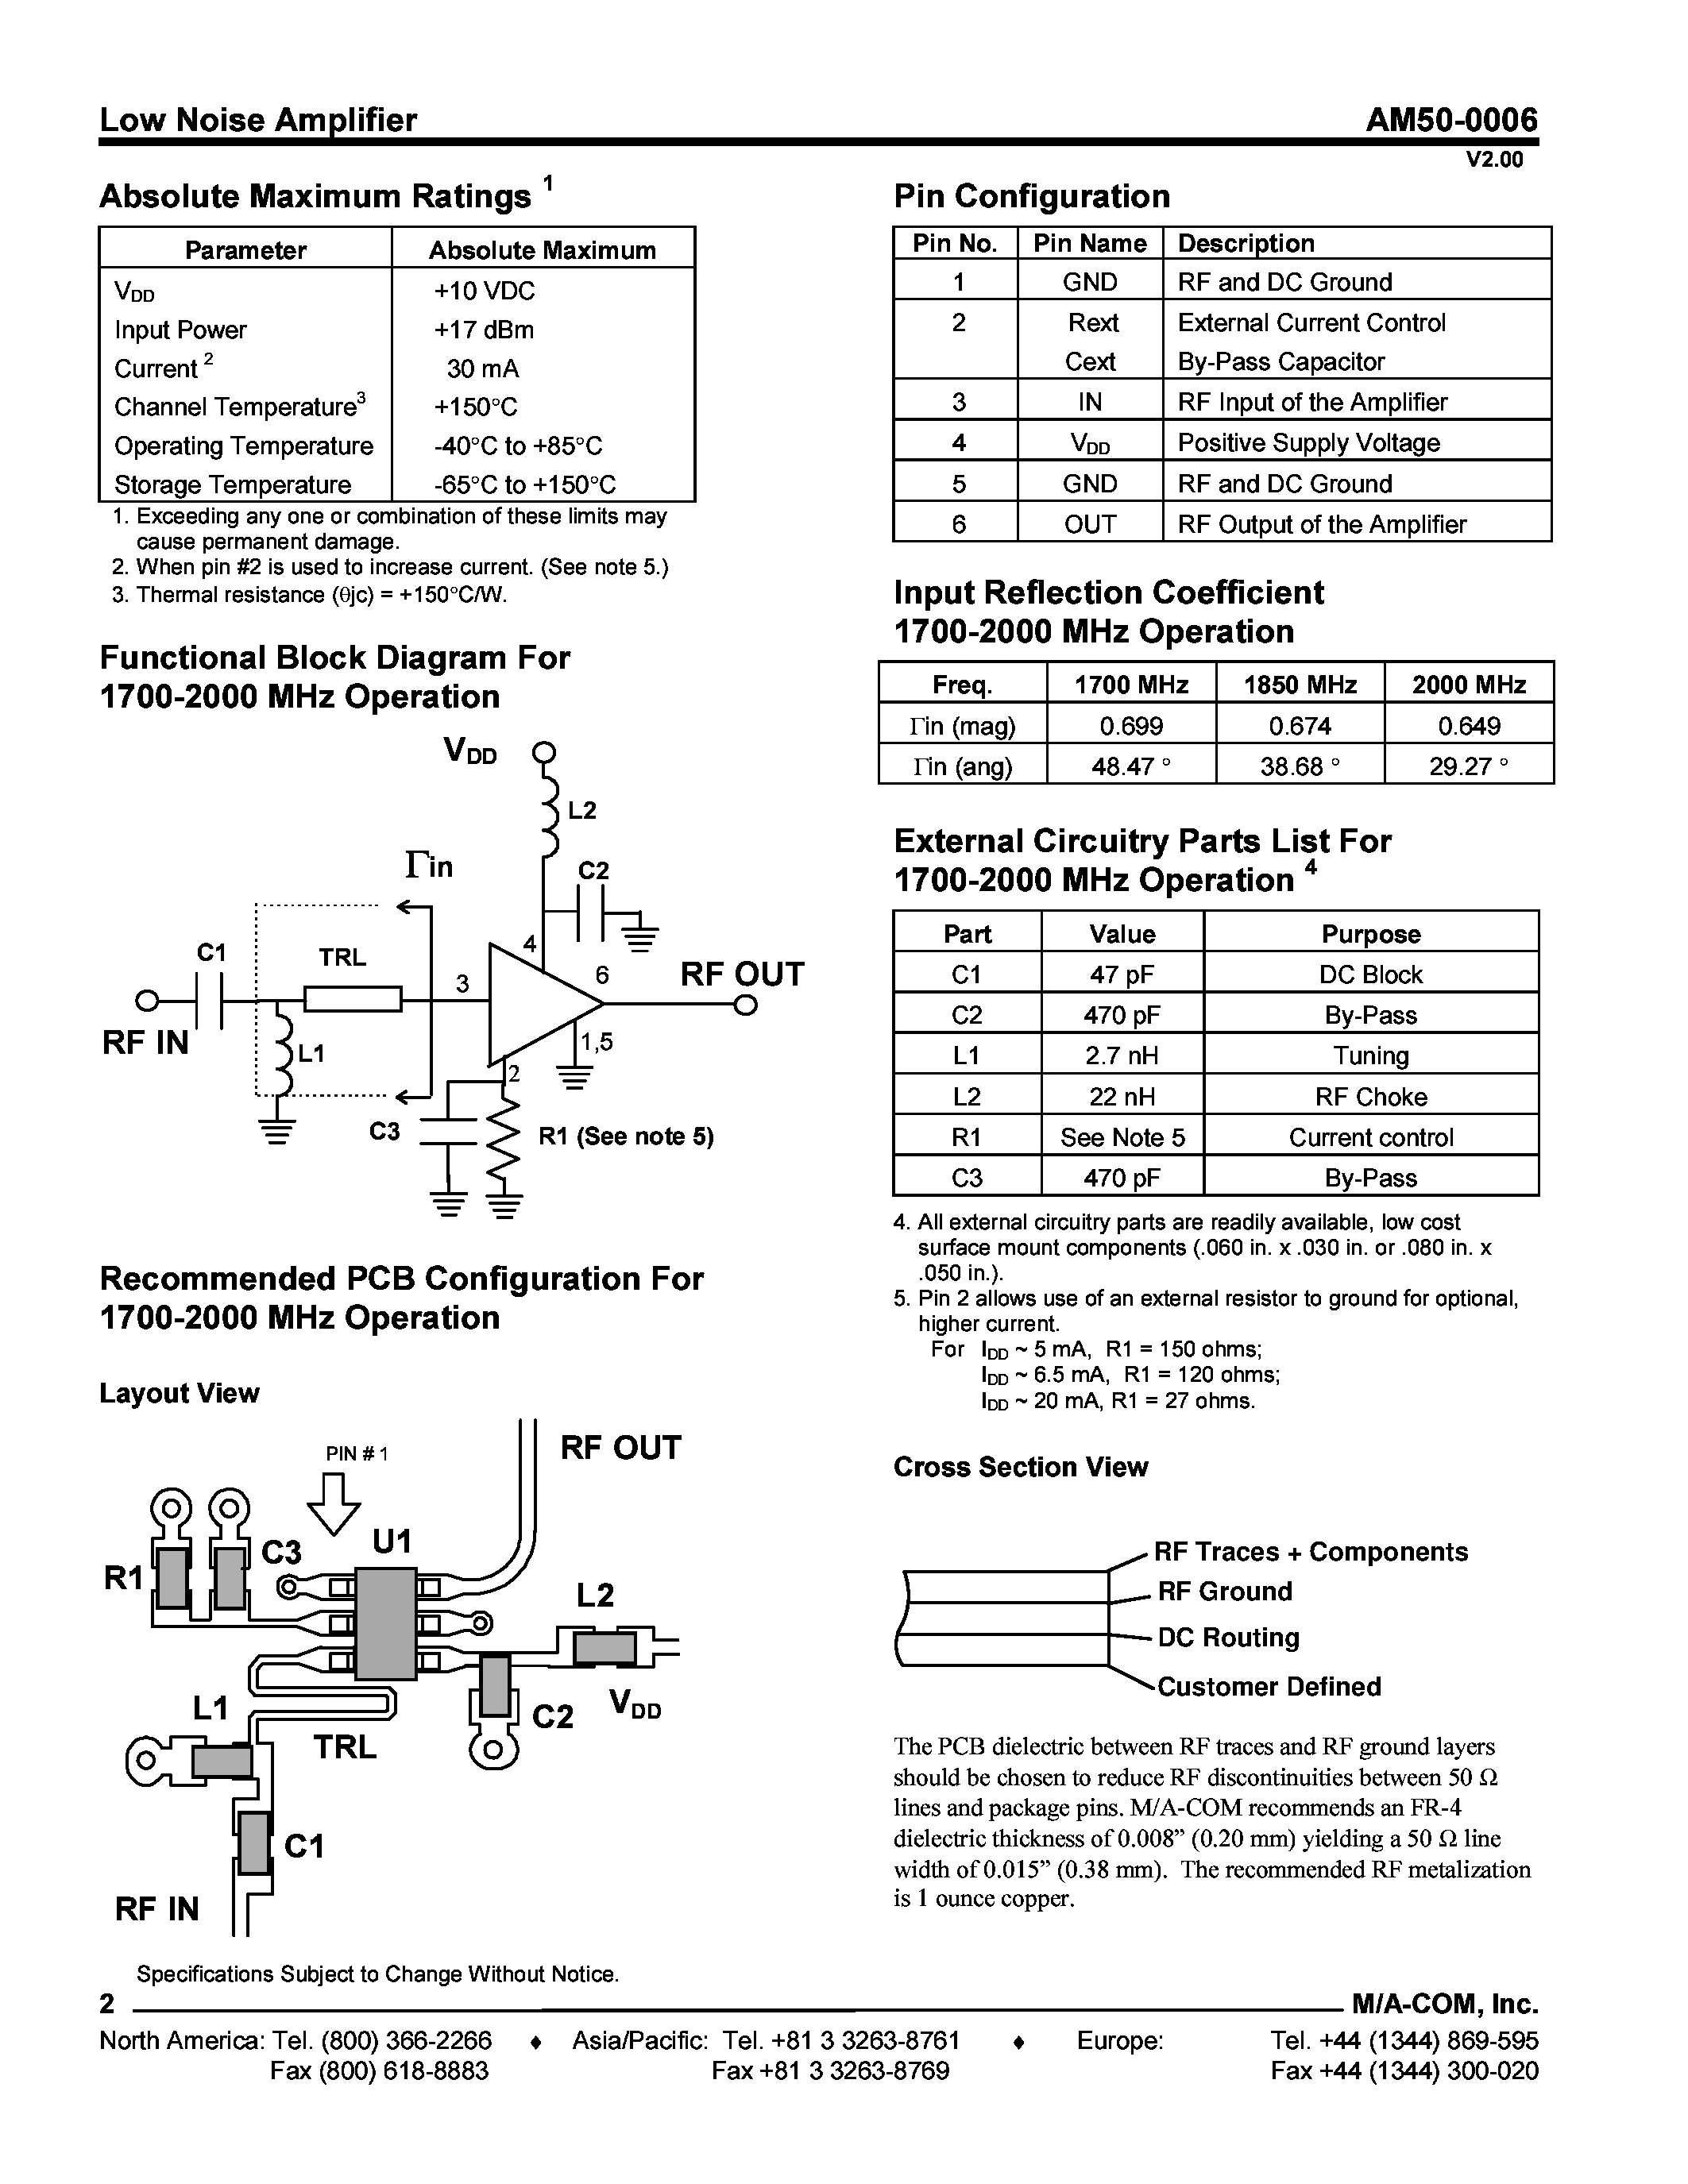 Datasheet AM50-0006 - Low Noise Amplifier 1400 - 2000 MHz page 2